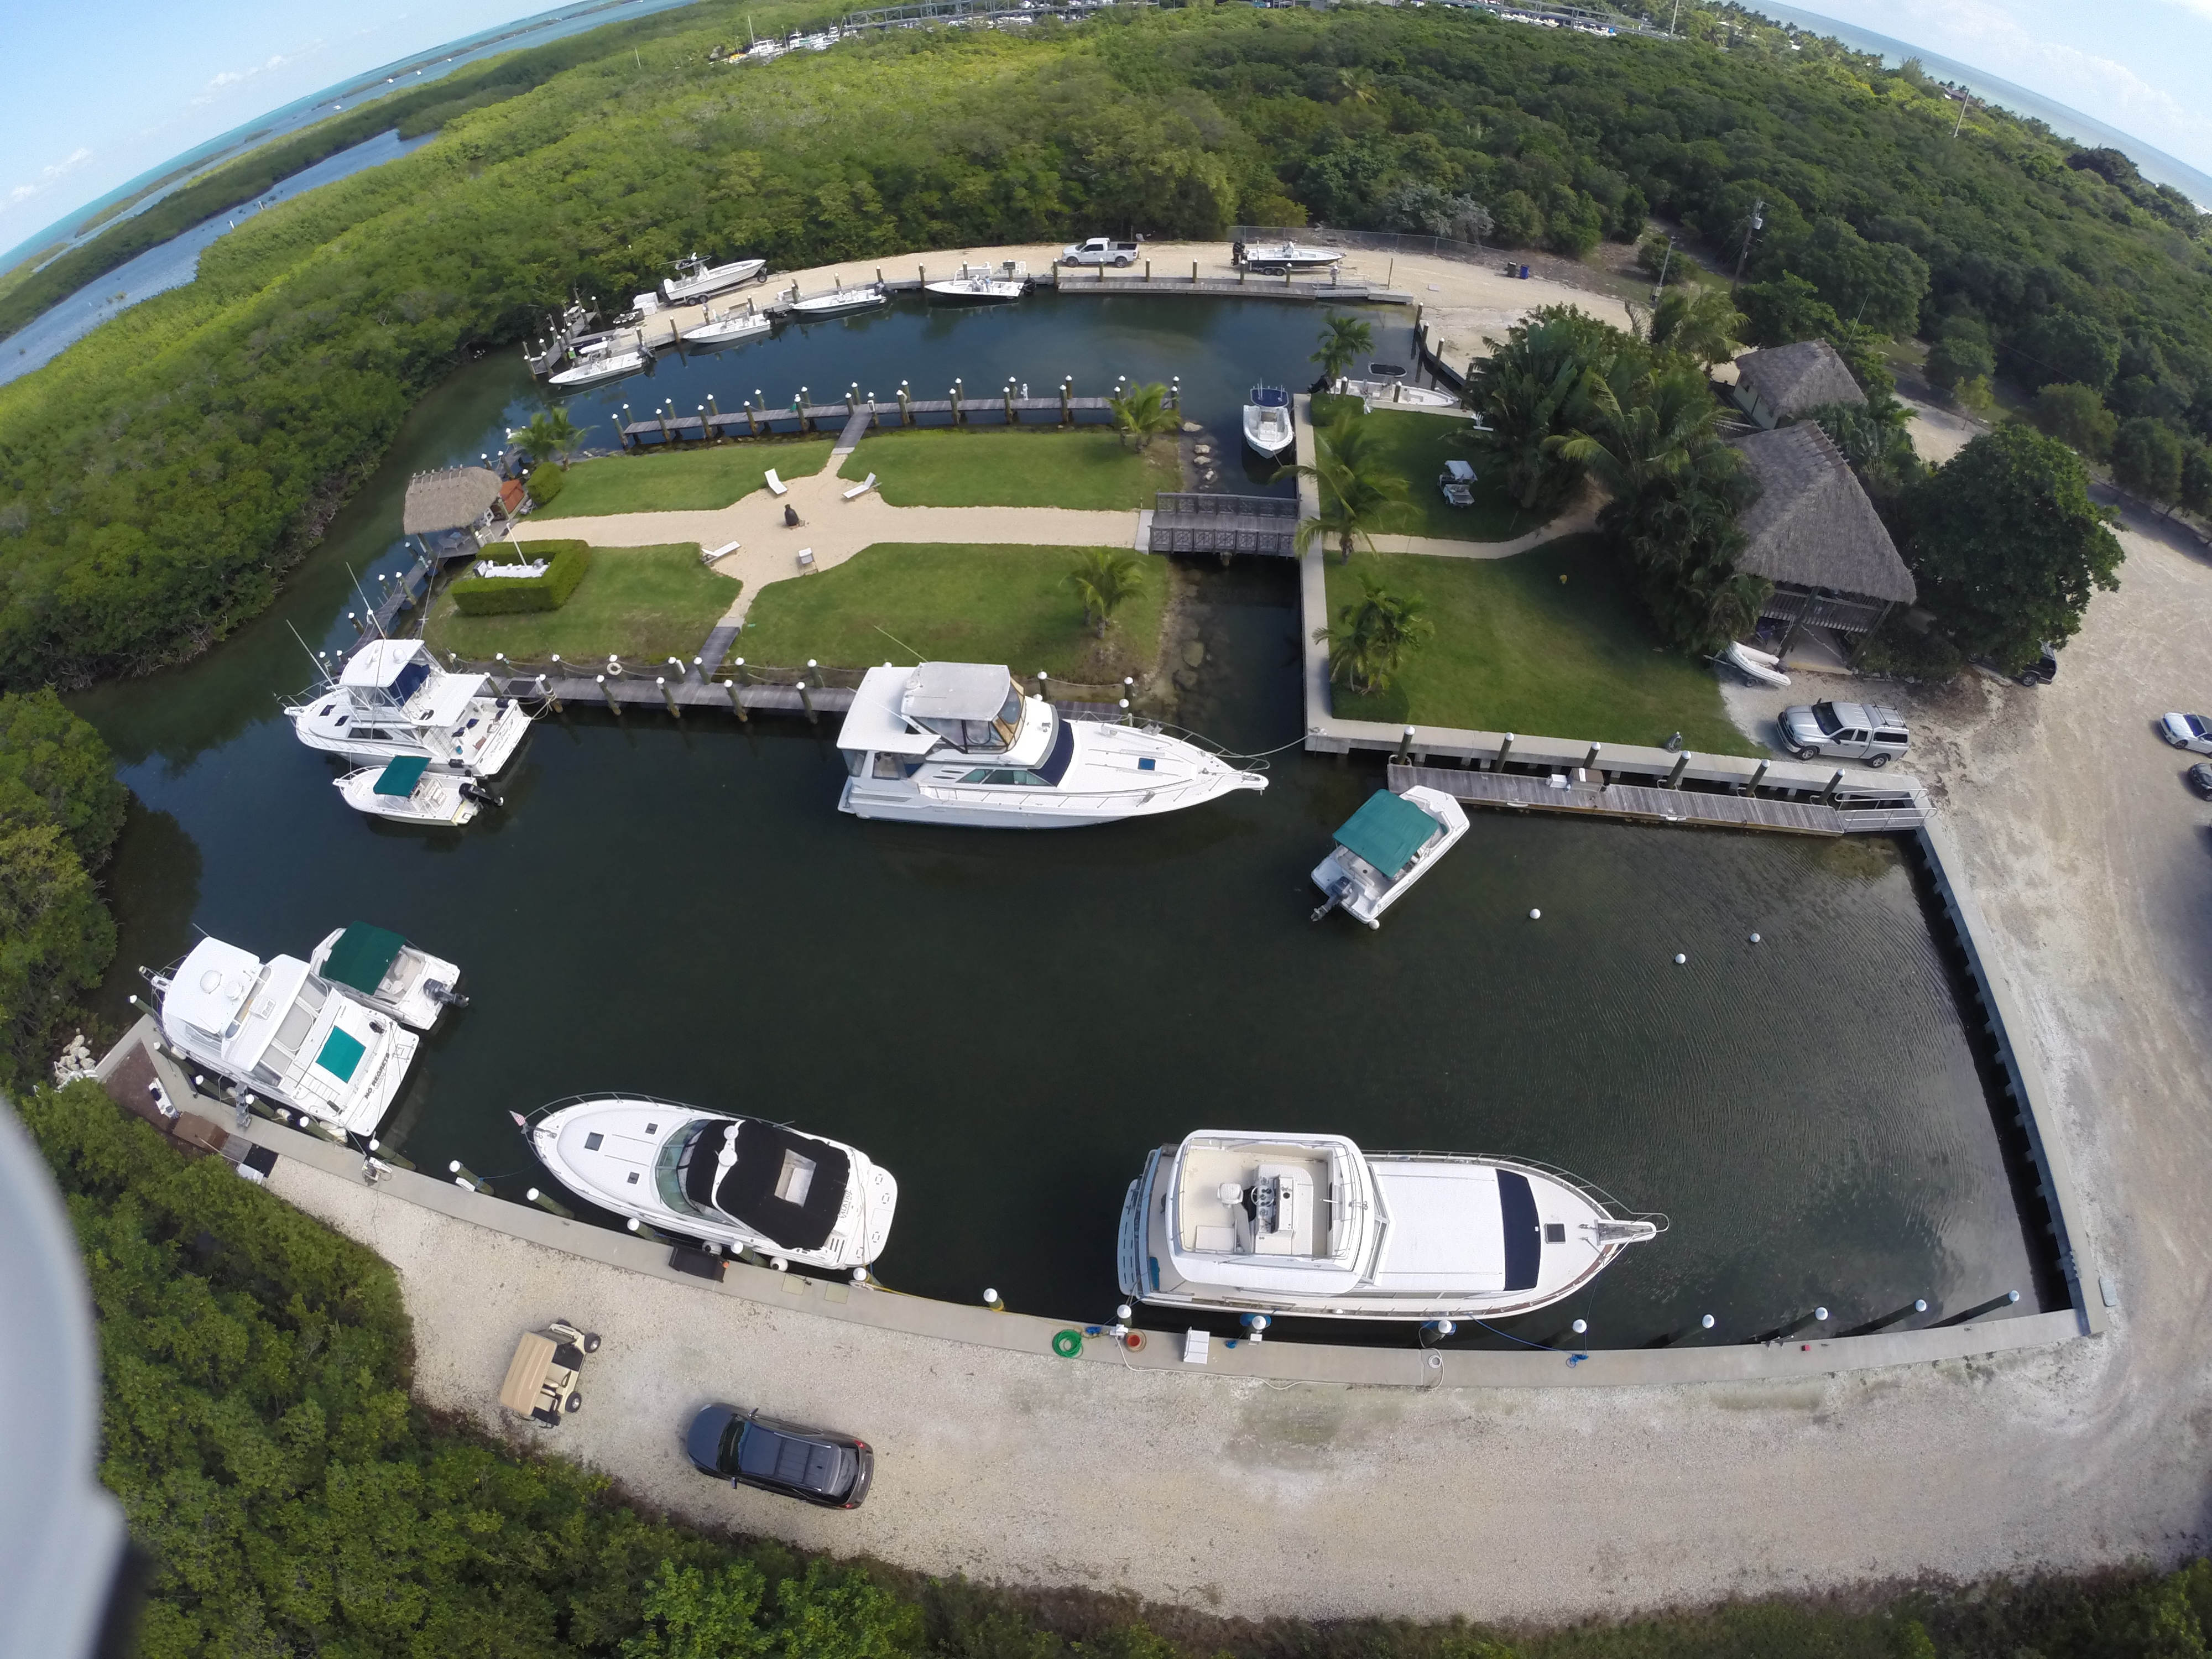 Angler House Marina in Islamorada, FL